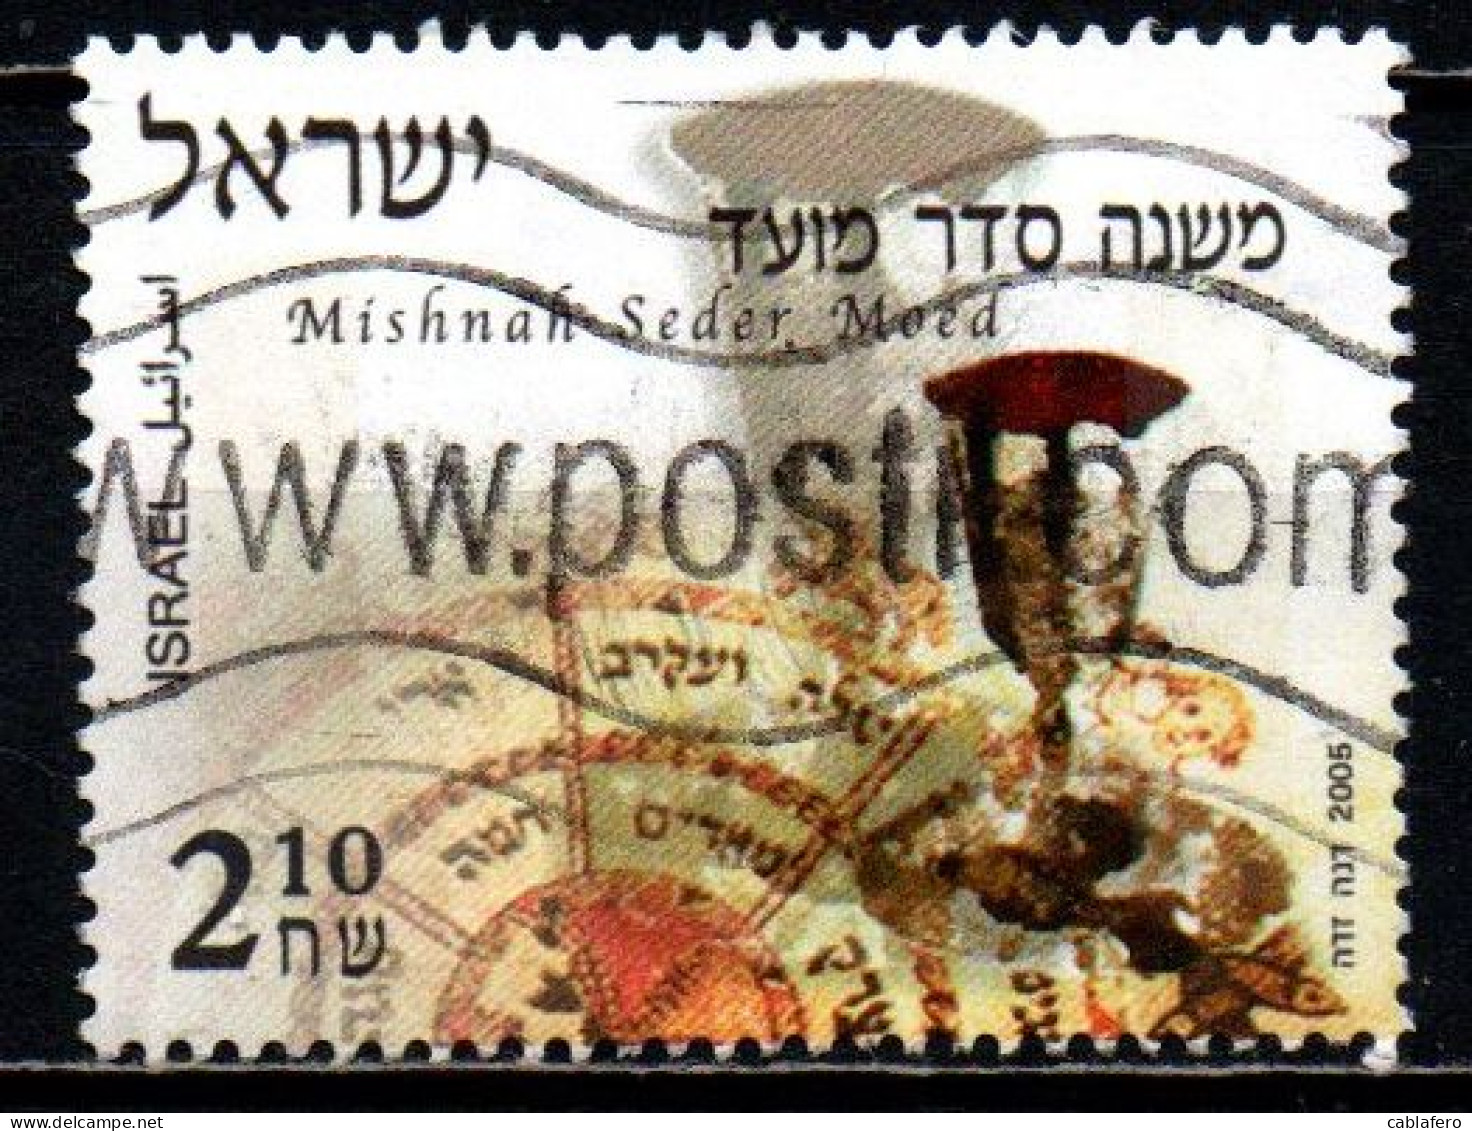 ISRAELE - 2005 - Orders Of The Mishnah - Moed - USATO - Usados (sin Tab)